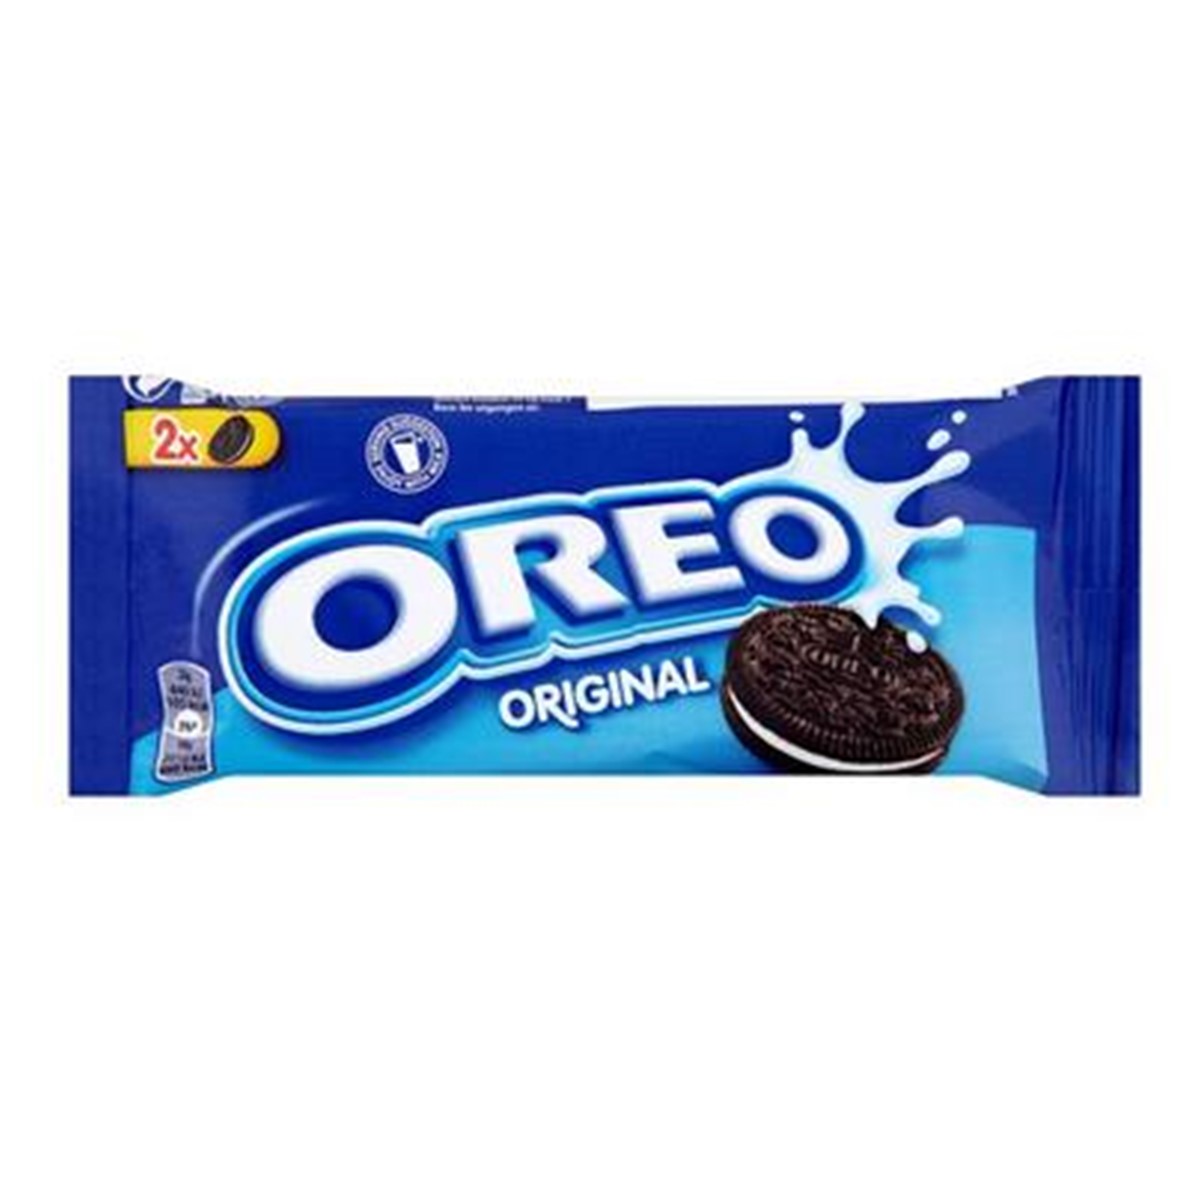 Oreo Cookies Original - 24x22g [twin] packs